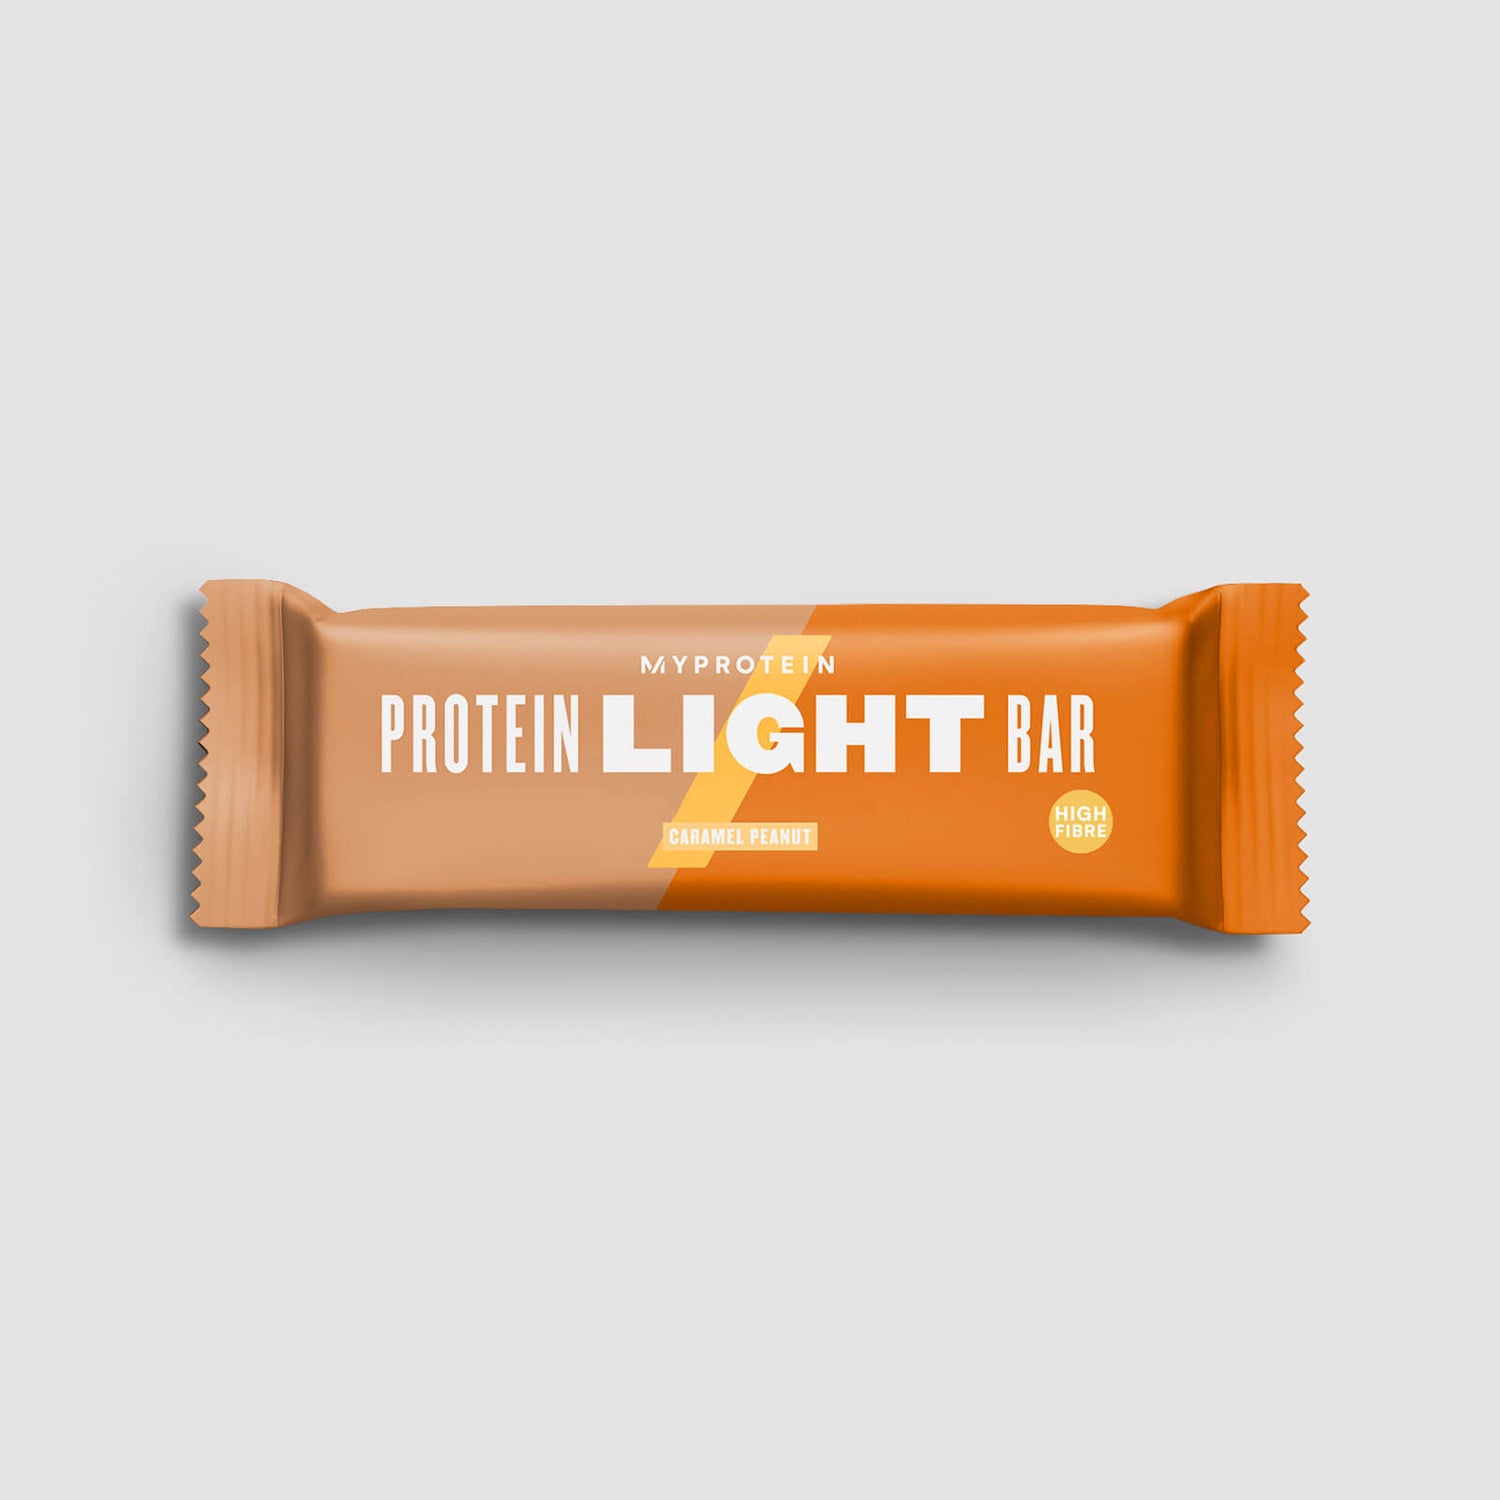 Protein Light Bar (Sample) - 65g - Speculoos